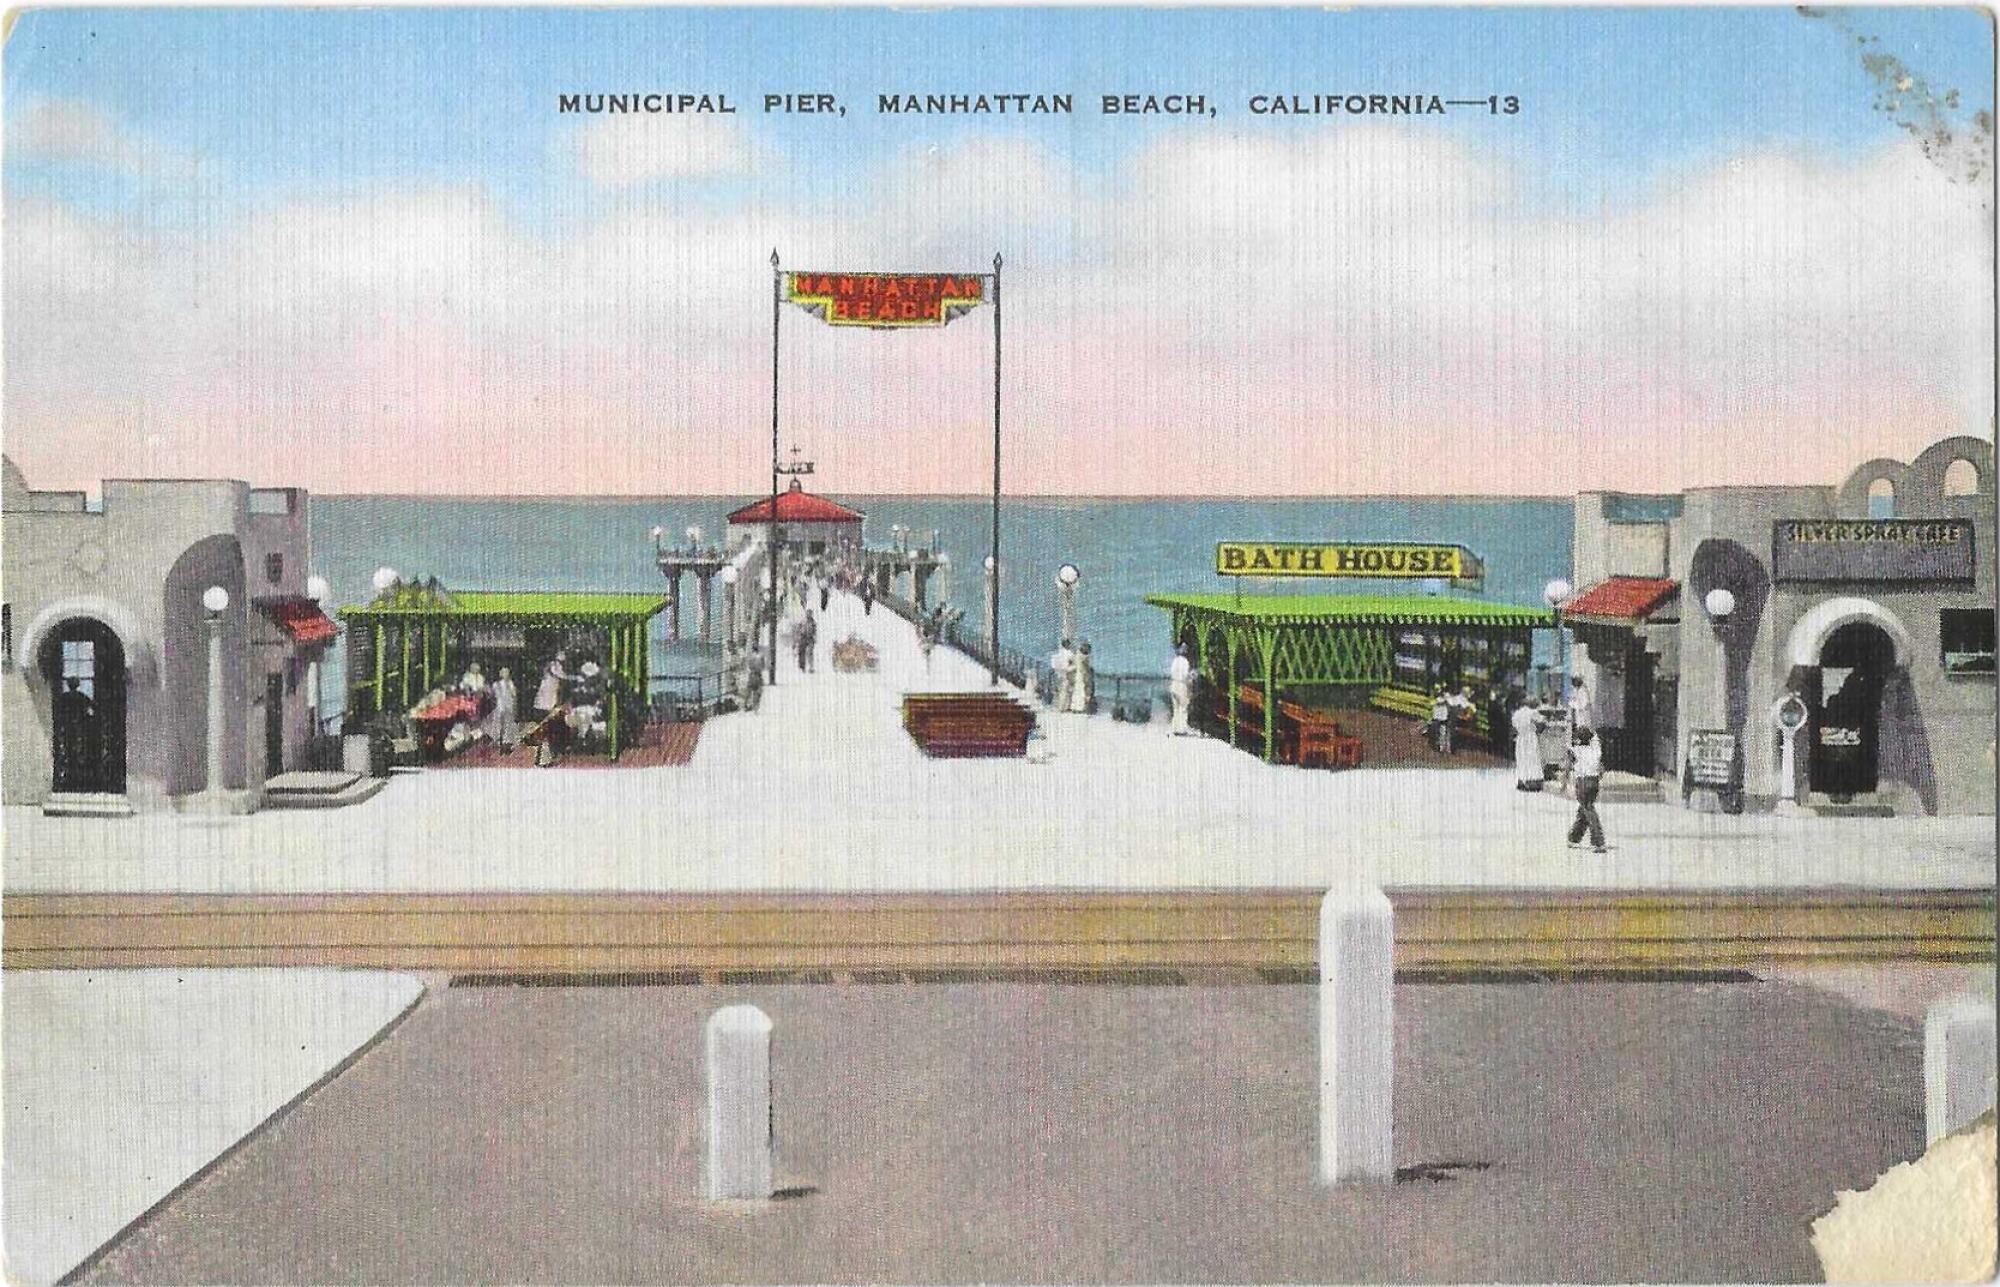 An old postcard shows a street-level view of the Manhattan Beach Pier 